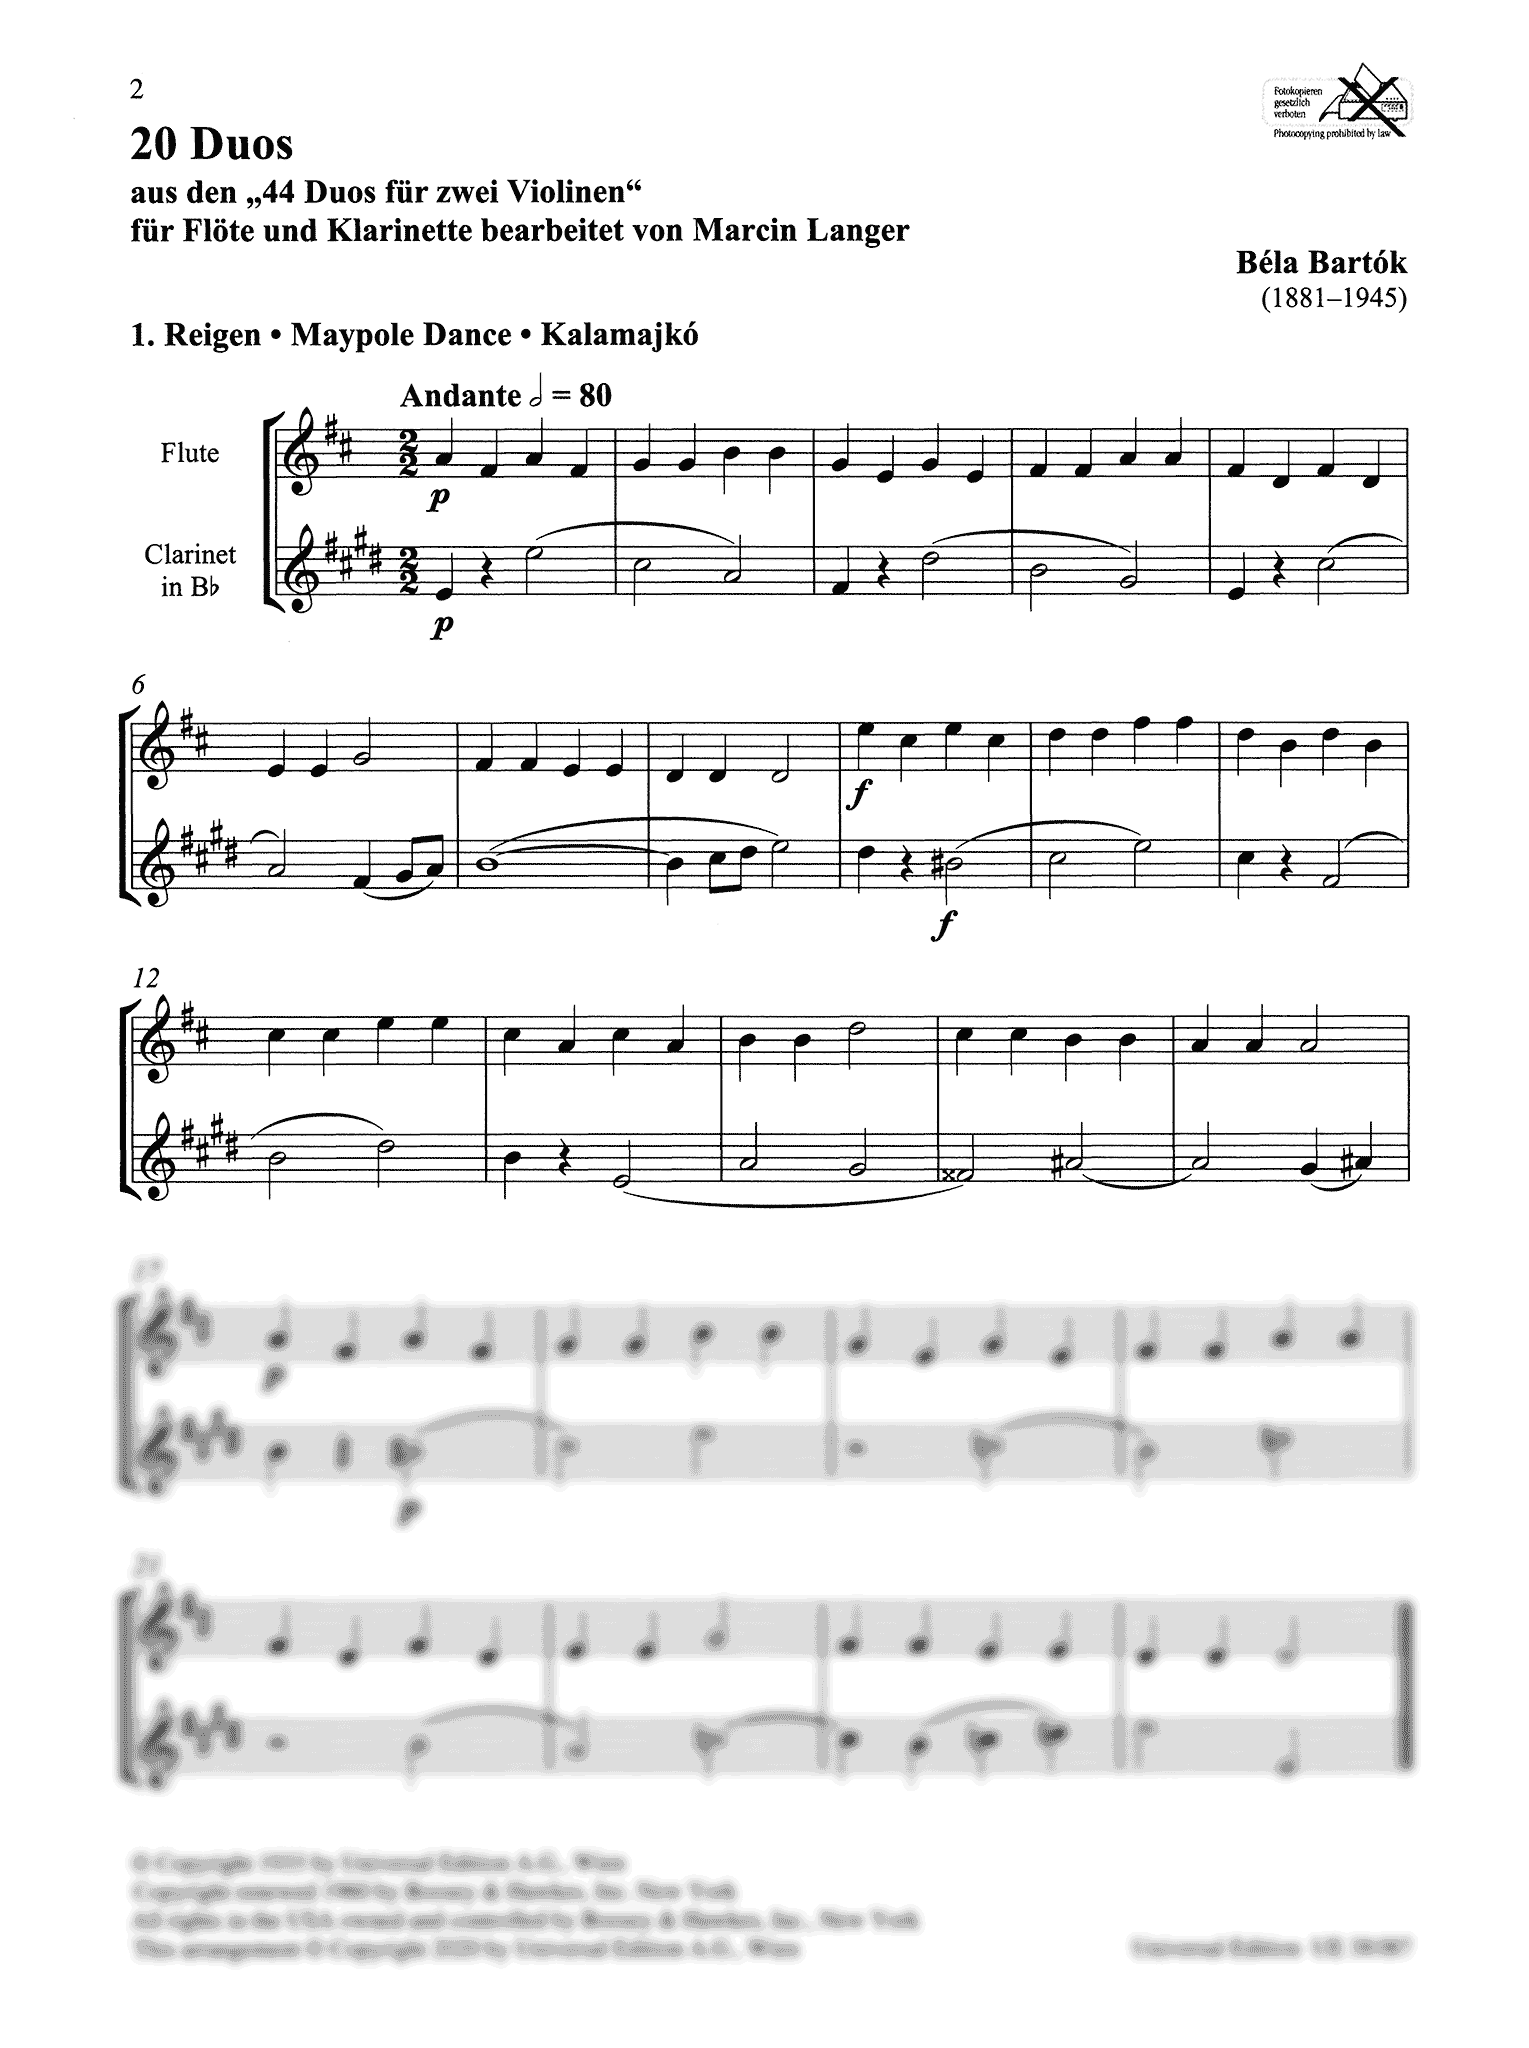 Bartók 20 Duos arranged for clarinet and flute Maypole dance